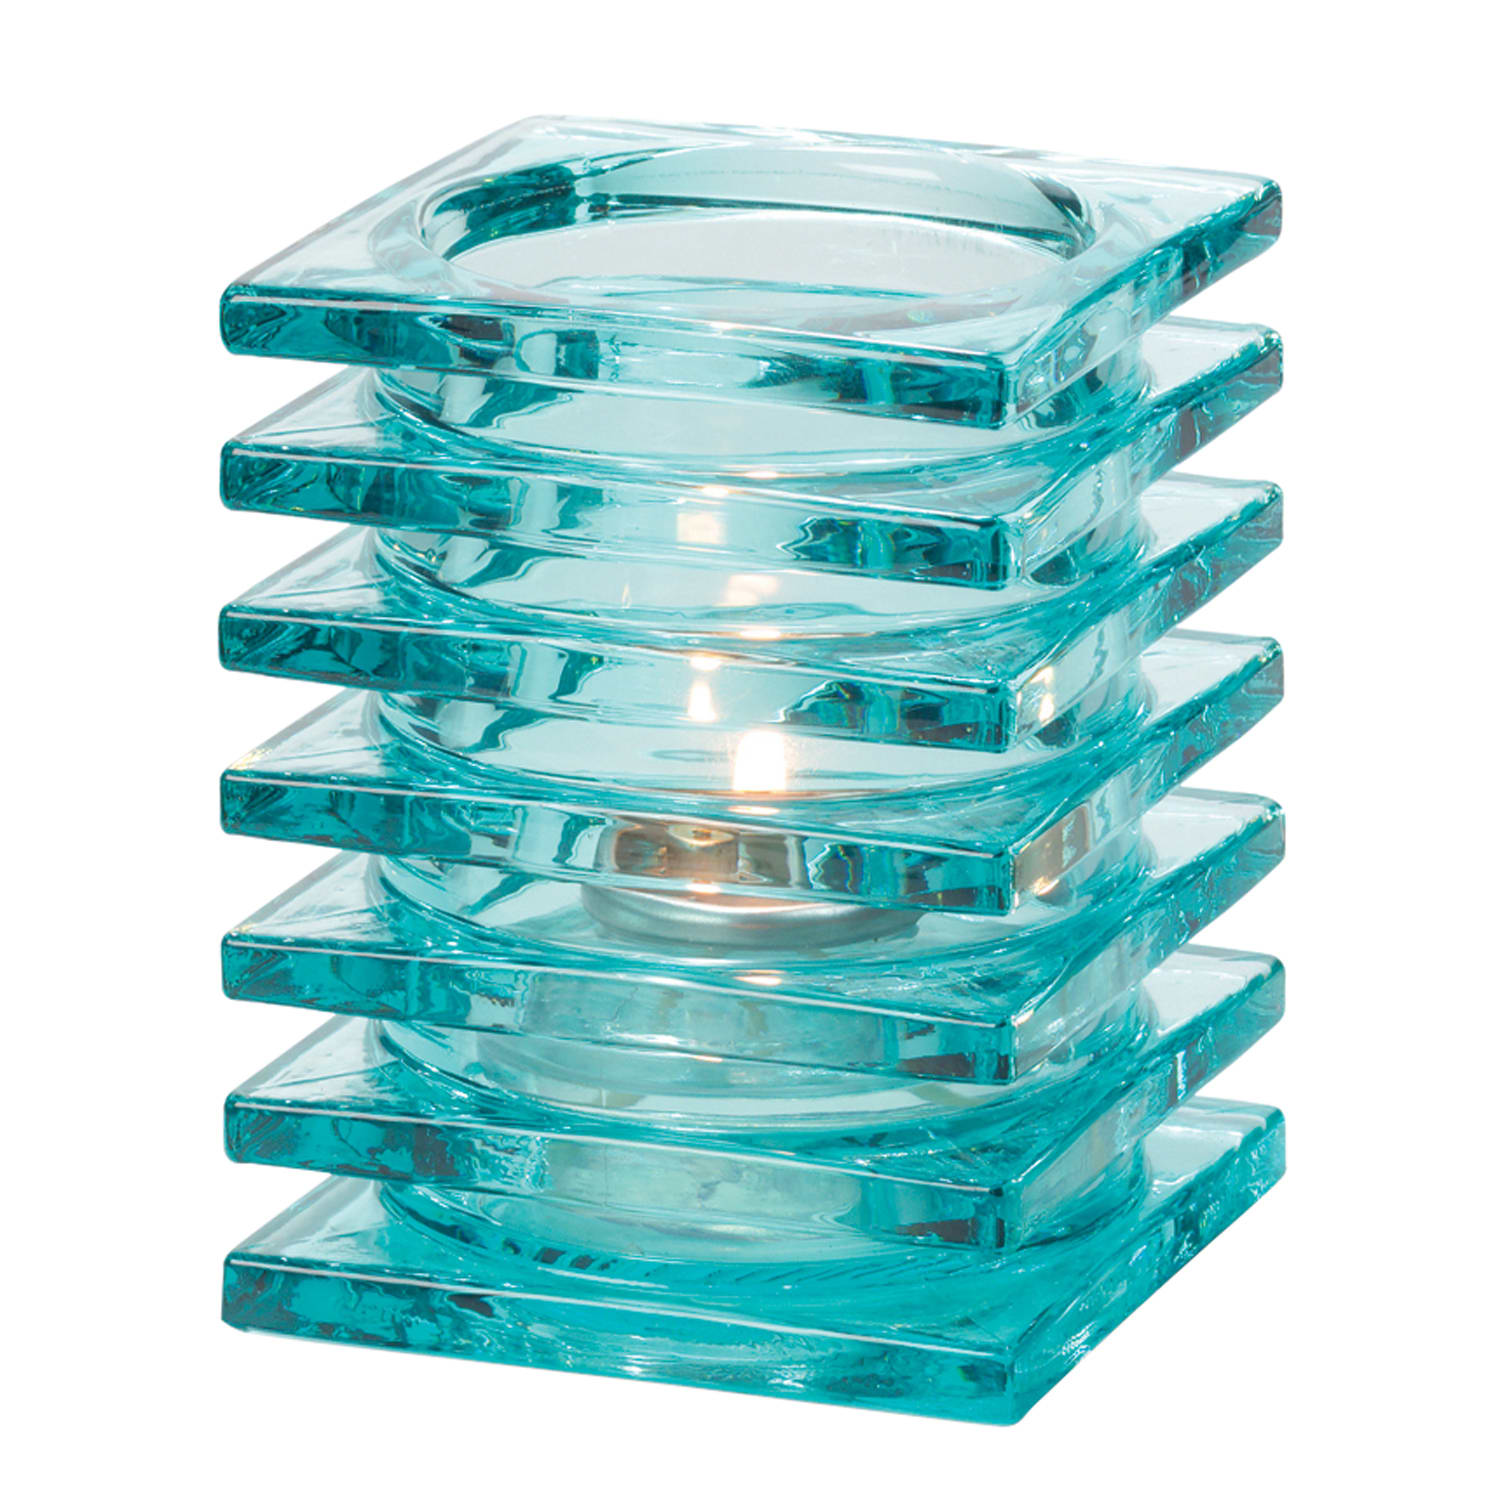 Hollowick® 1501AQ Aqua Stacked Square Glass Block Lamp